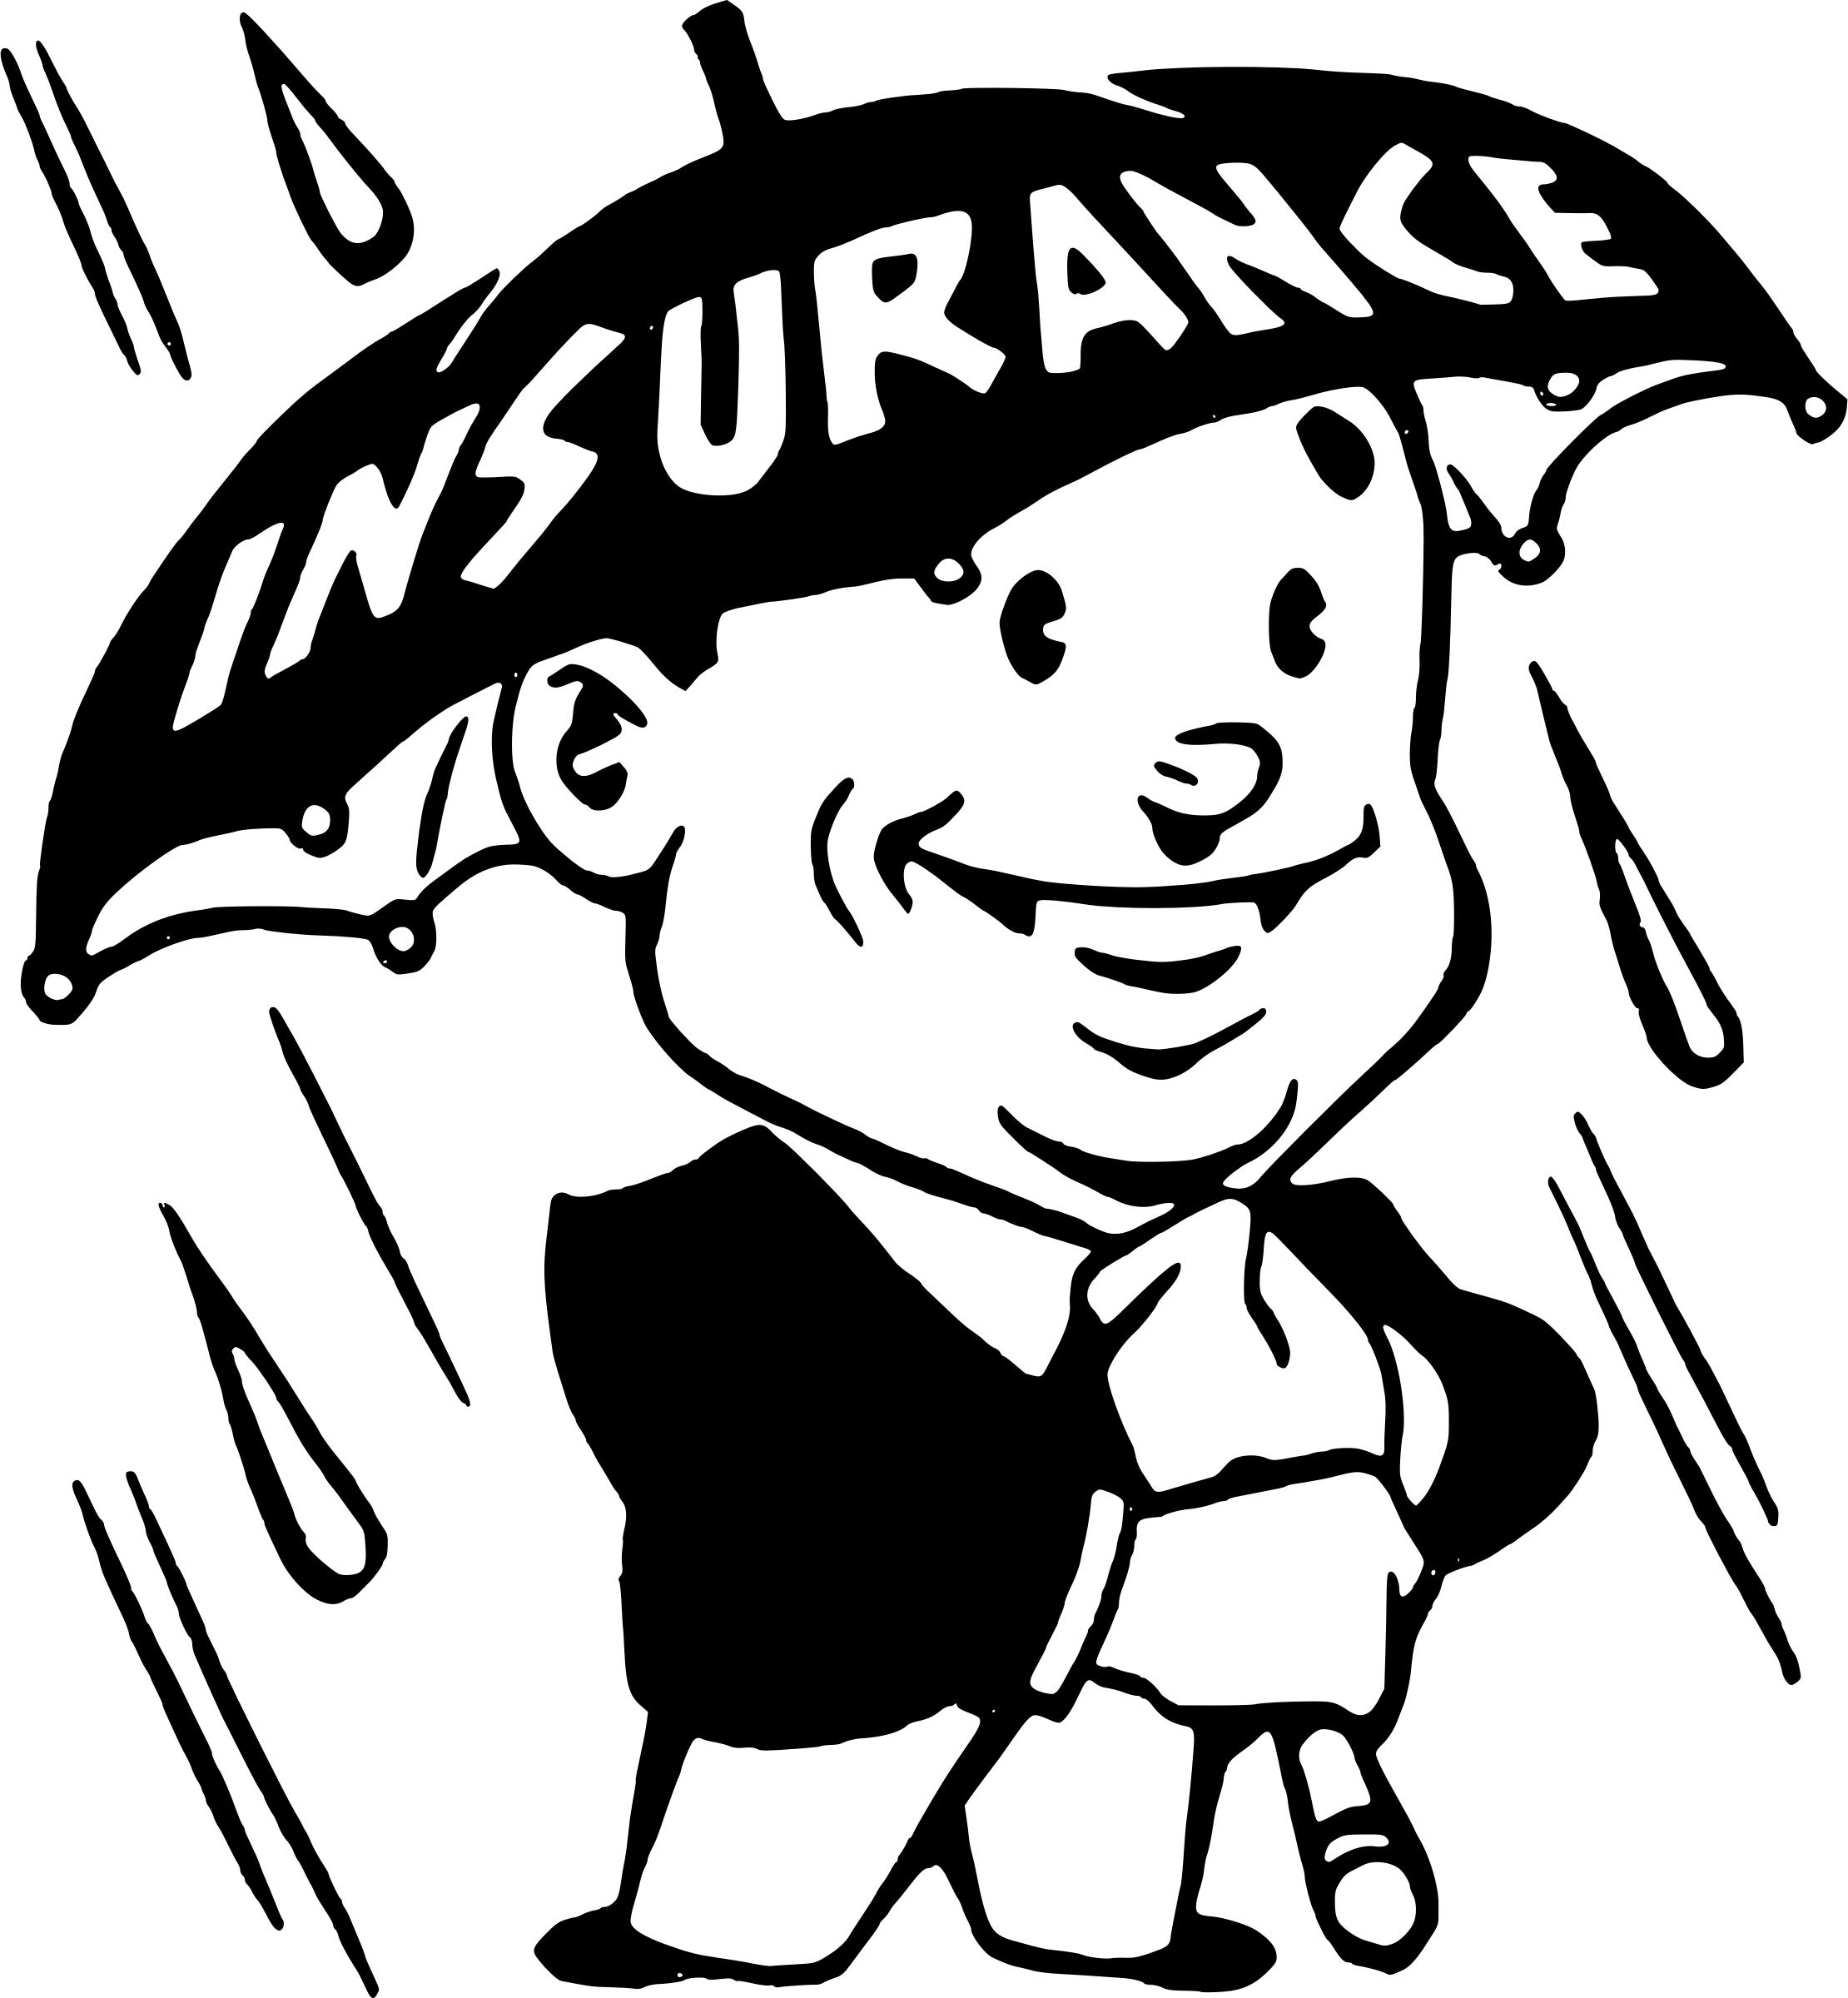 Insurance umbrella PNG icons